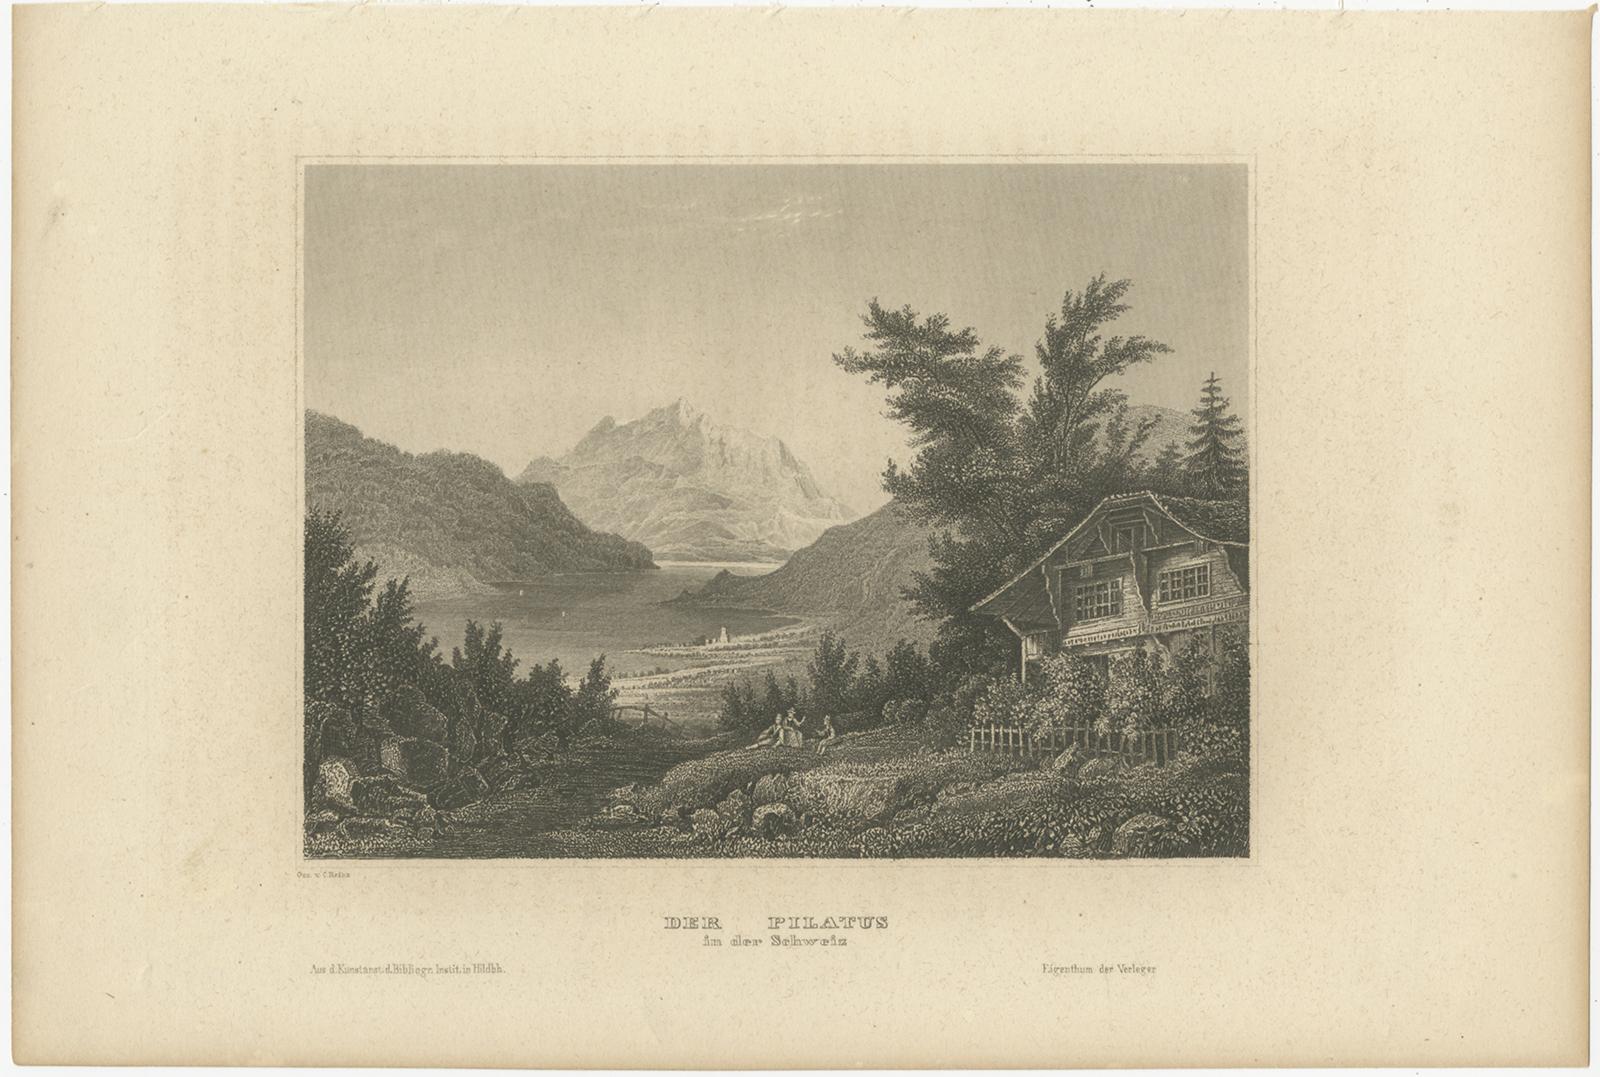 Antique print titled 'Der Pilatus in der Schweiz'. View of Mount Pilatus, a mountain massif overlooking Lucerne in Central Switzerland. Originates from 'Meyers Universum'. Published circa 1850.

Joseph Meyer (May 9, 1796 - June 27, 1856) was a